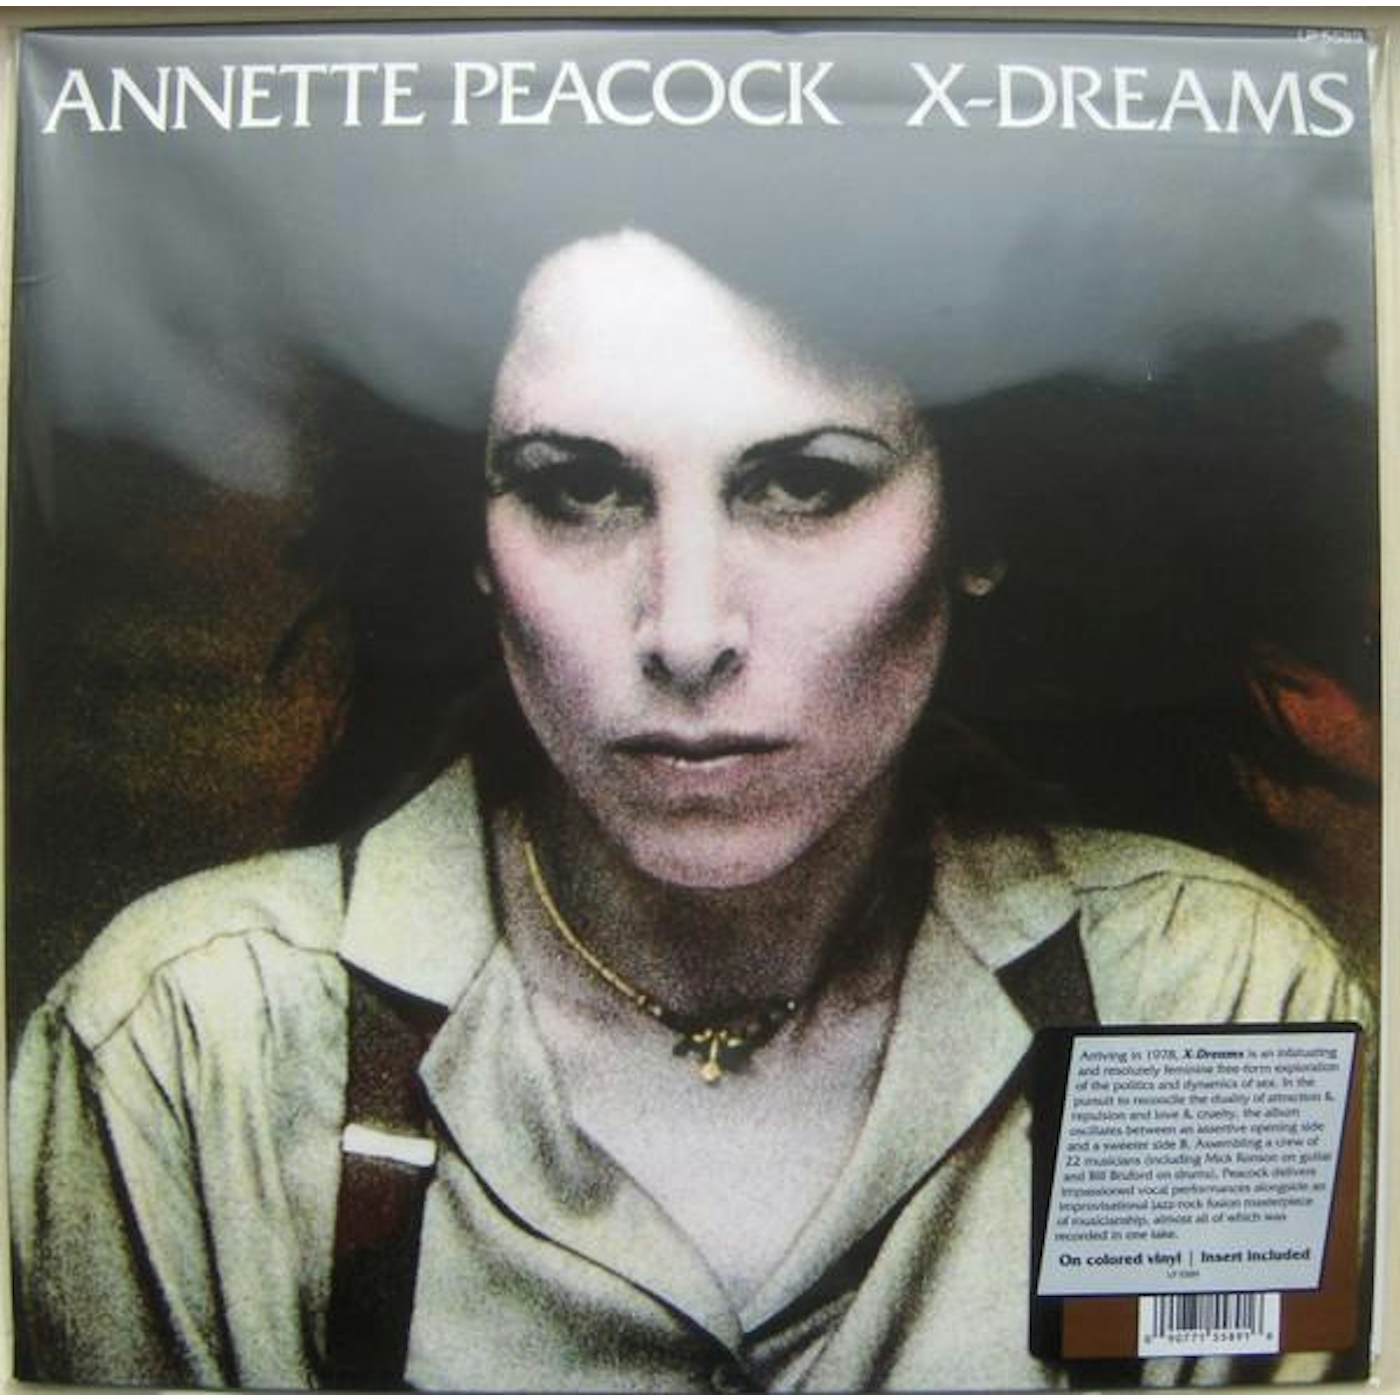 Annette Peacock X-DREAMS (GOLD VINYL) Vinyl Record